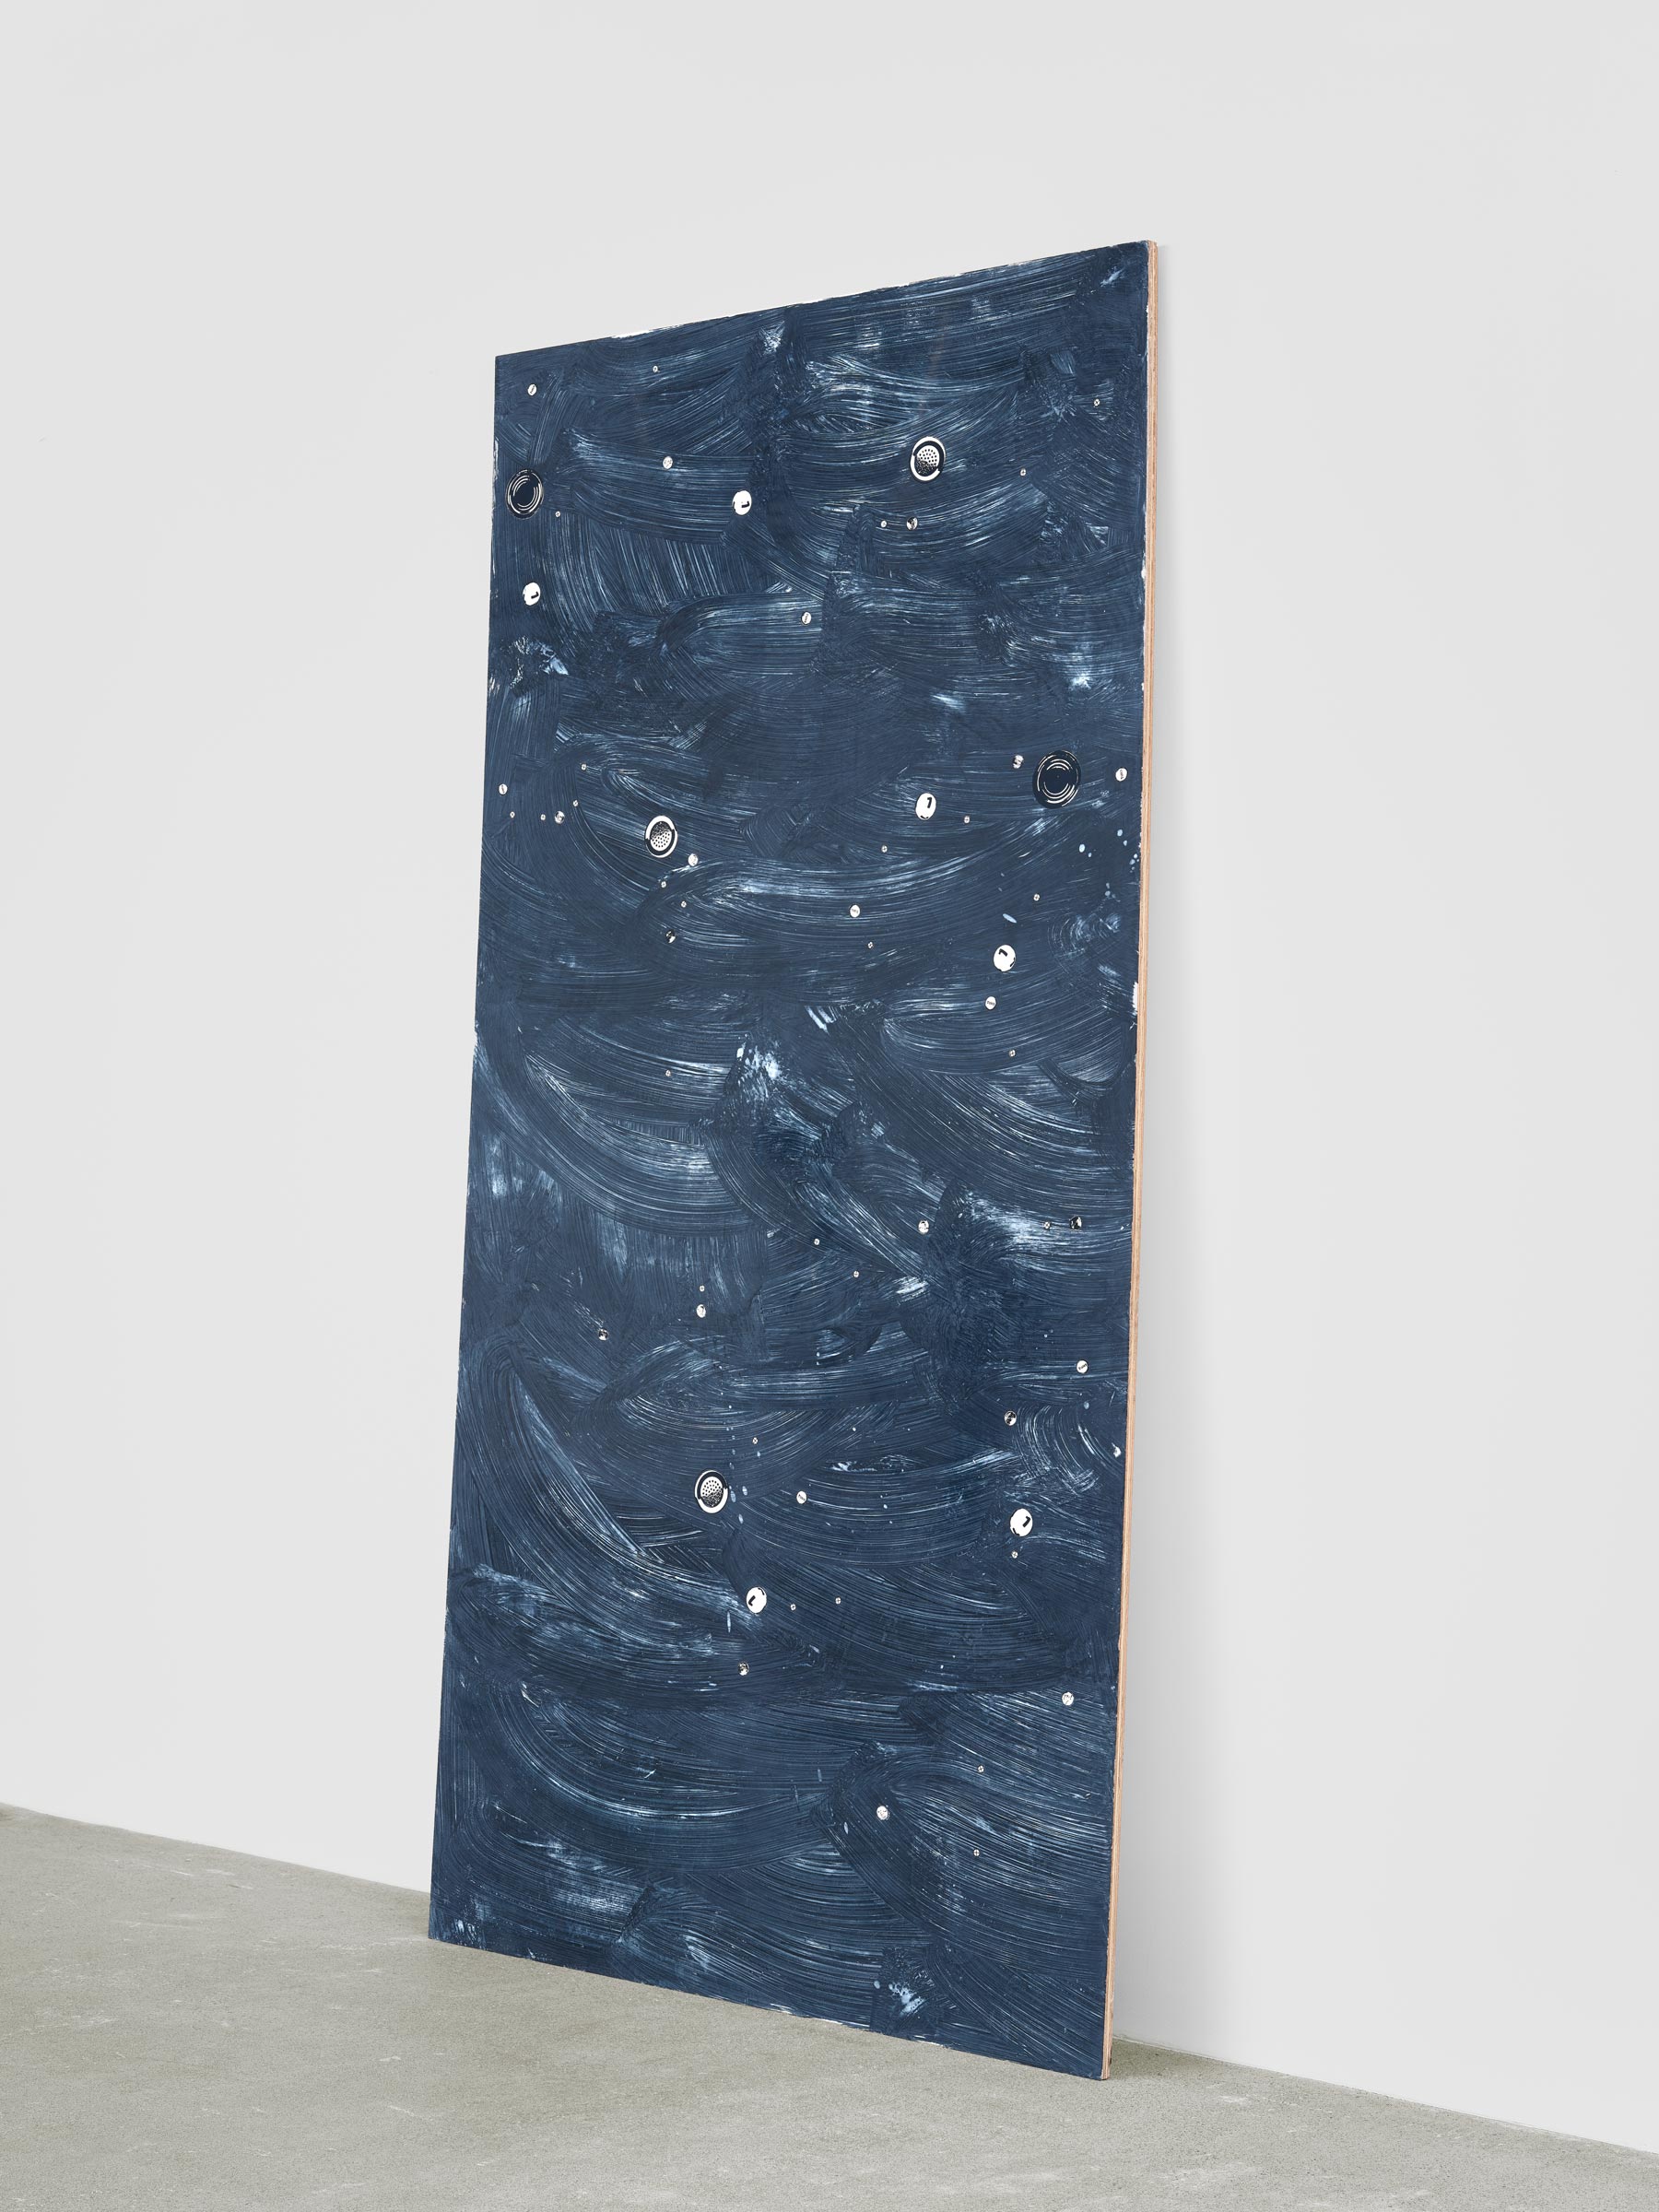 Alex Kwartler, Night Sky I, 2022, Venetian plaster and enamel on plywood, 96 x 48 in.